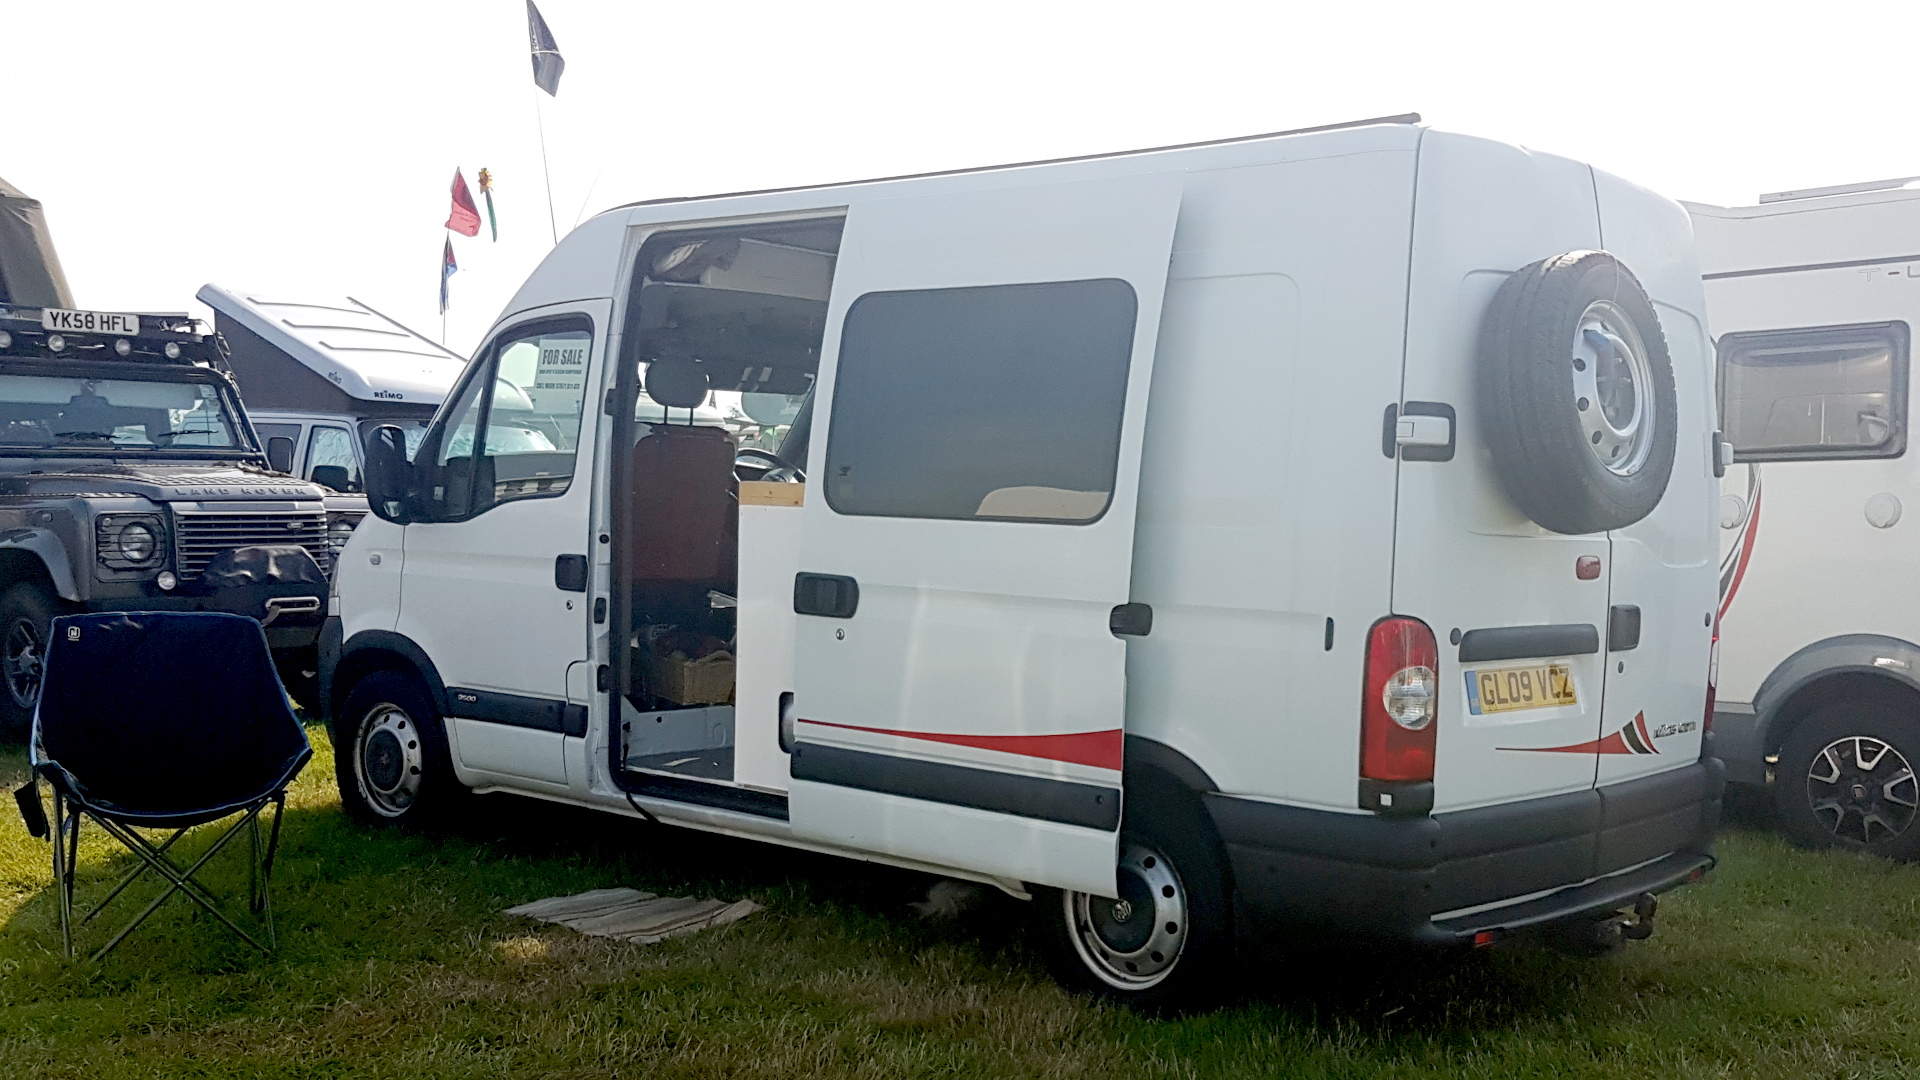 My Custom 2009 Vauxhall Movano / Renault Master Campervan/Motorhome Conversion: Full Video Tour